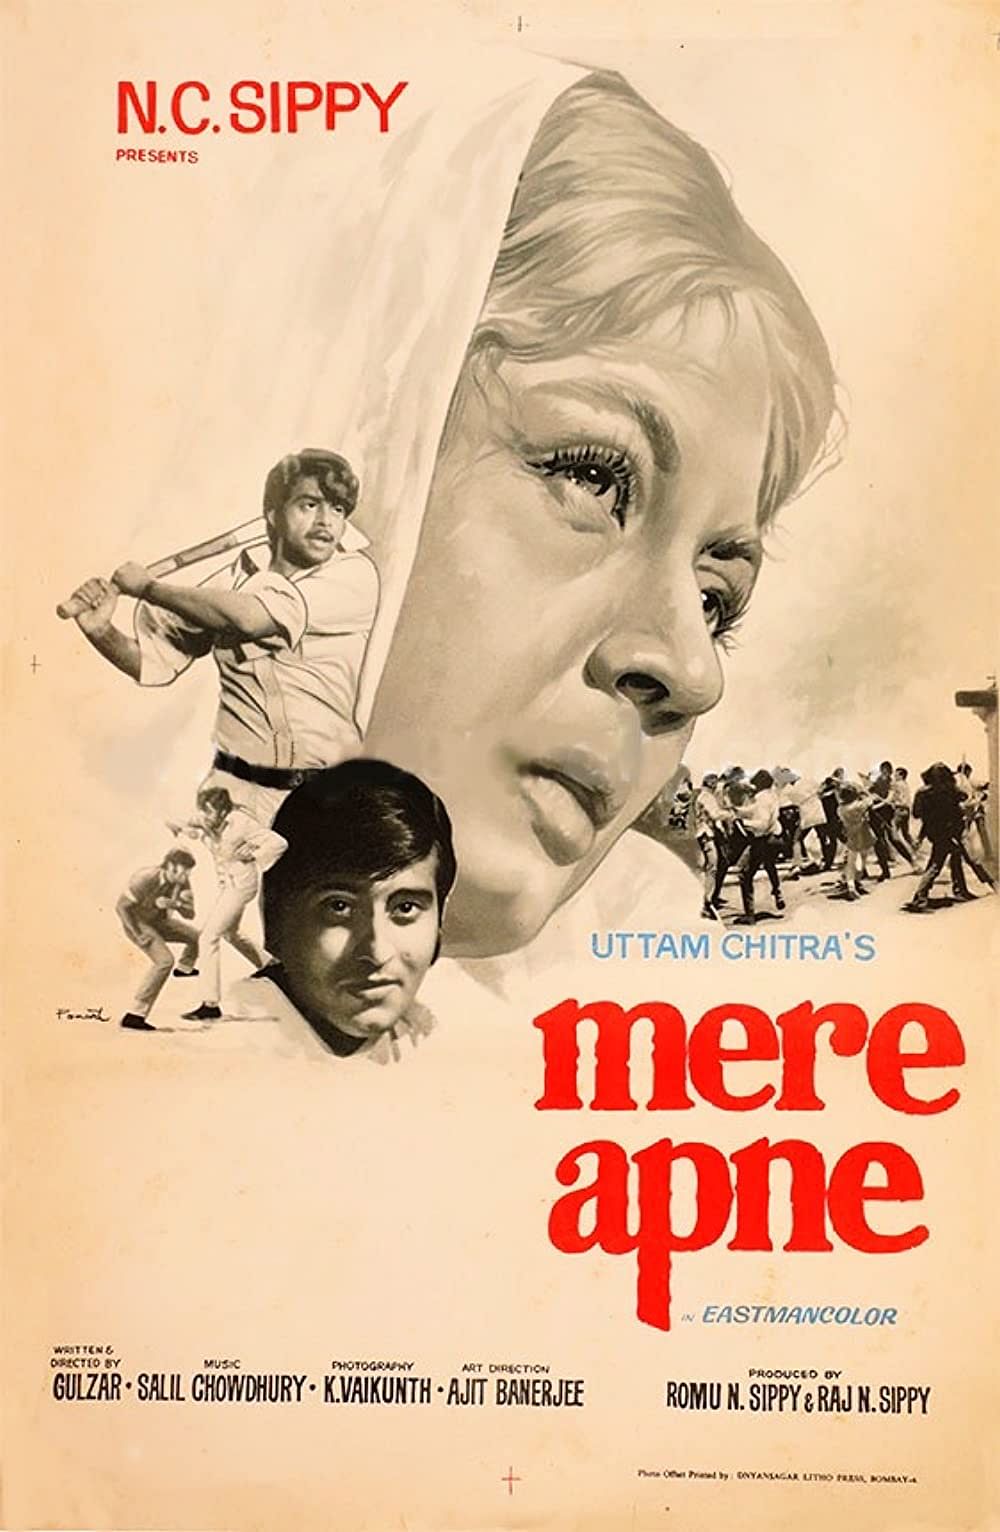 Gulzar speaks on his directorial debut 'Mere Apne' starring Vinod Khanna, Meena Kumari, Shatrughan Sinha